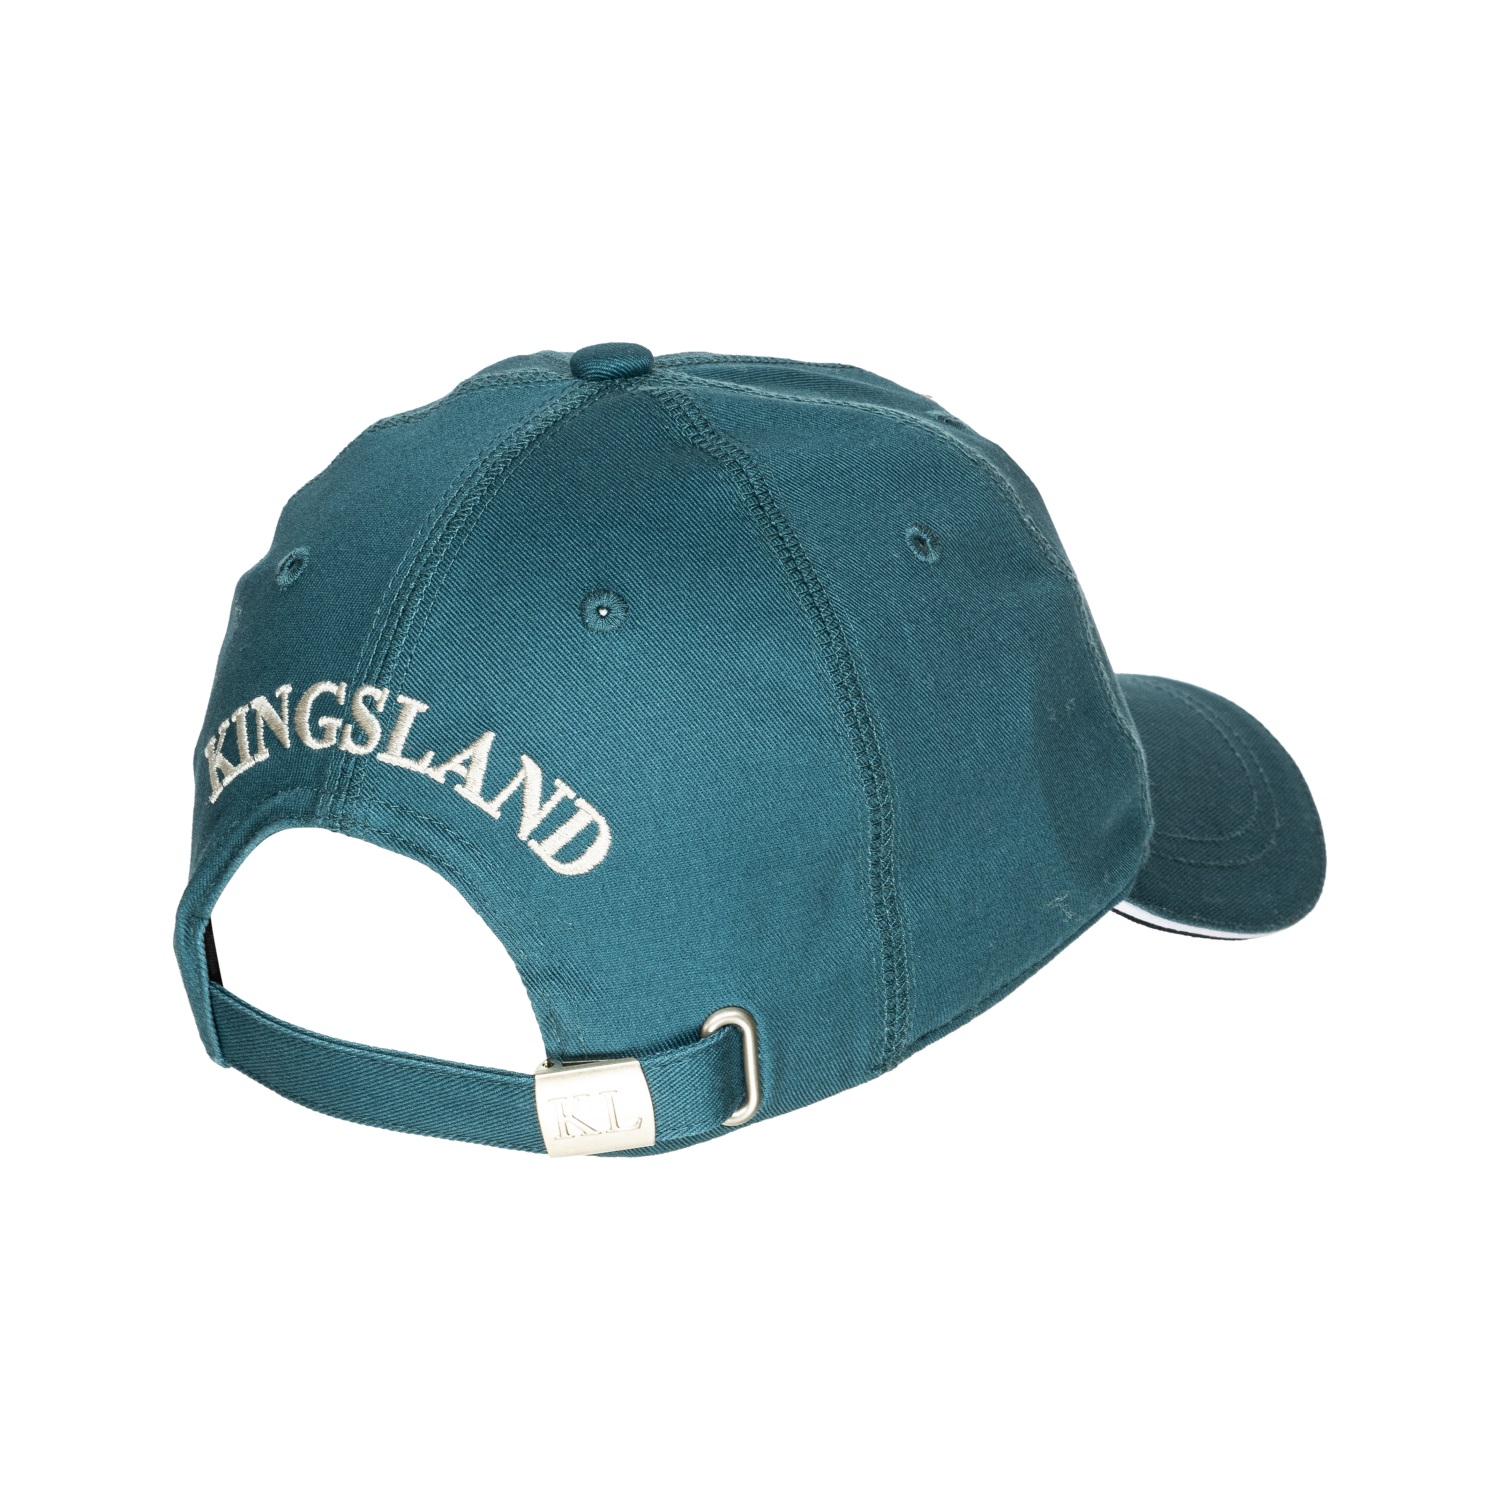 KINGSLAND Unisex Classic Limited Cap, Basecap - green black ink - onesize - 8